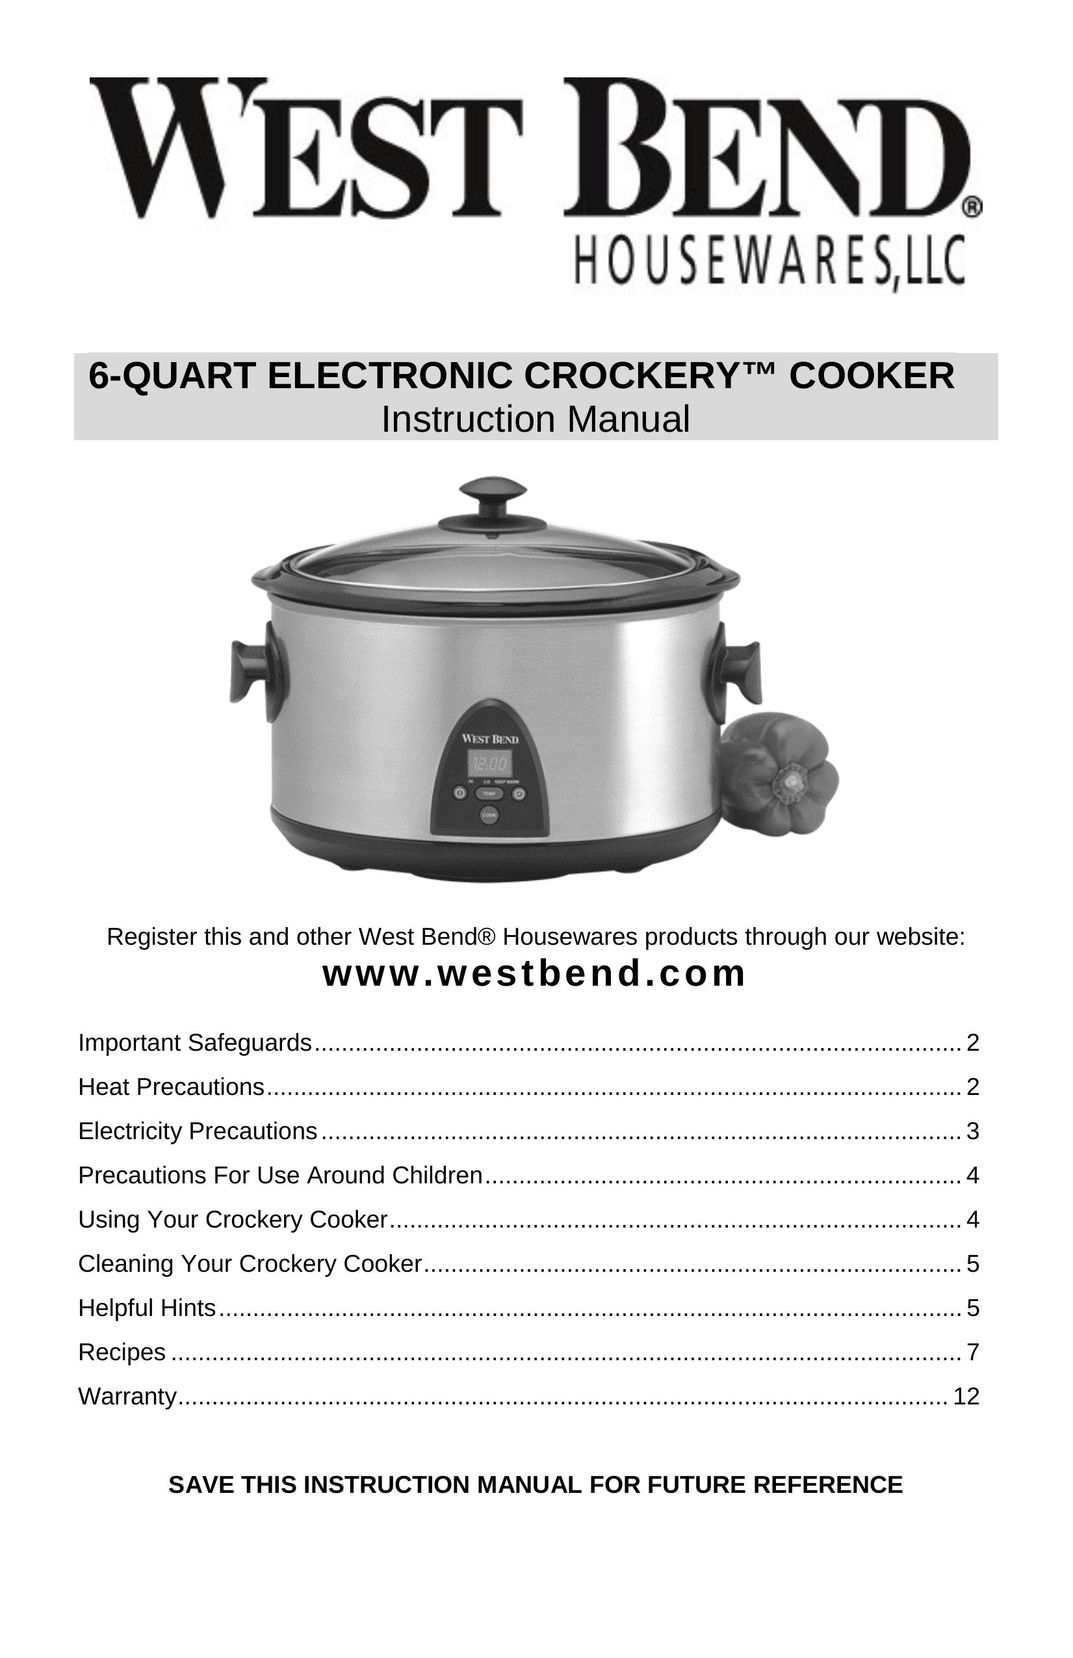 West Bend 6-QUART ELECTRONIC CROCKERYTM COOKER Cooktop User Manual